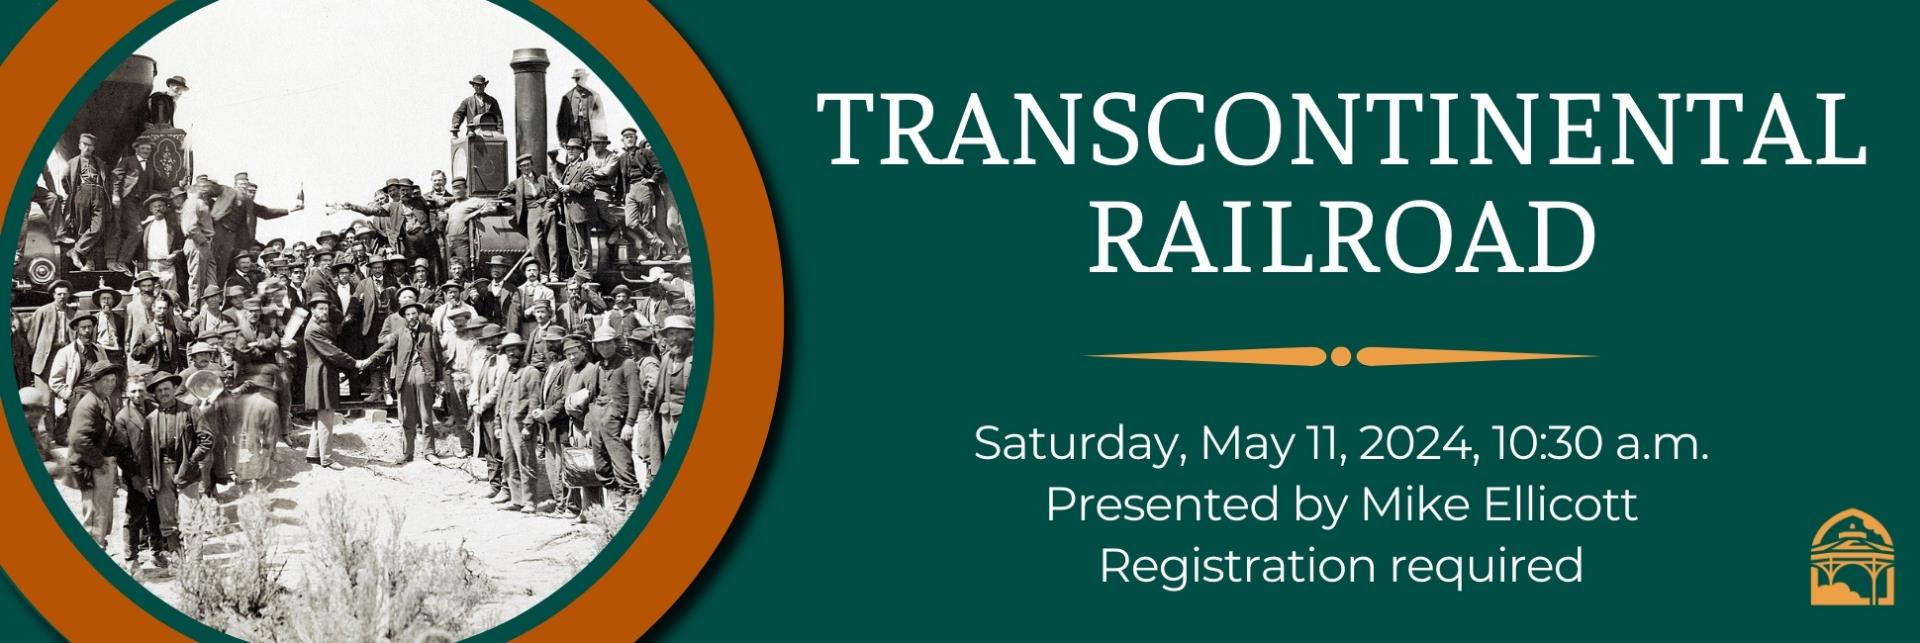 2024-05 Transcontinental Railroad Banner